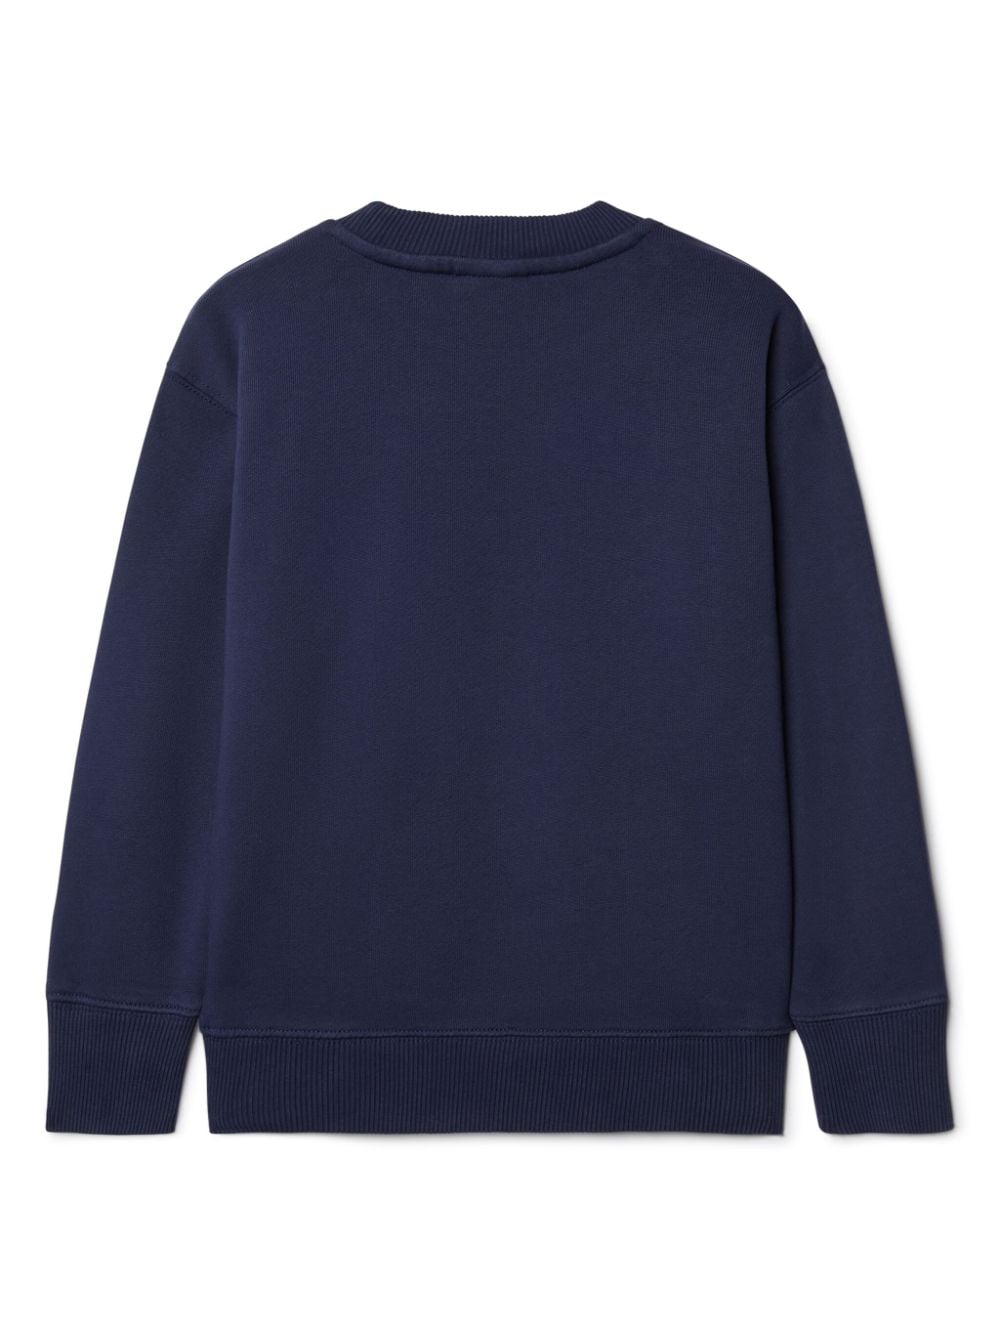 Navy blue cotton sweatshirt for boys